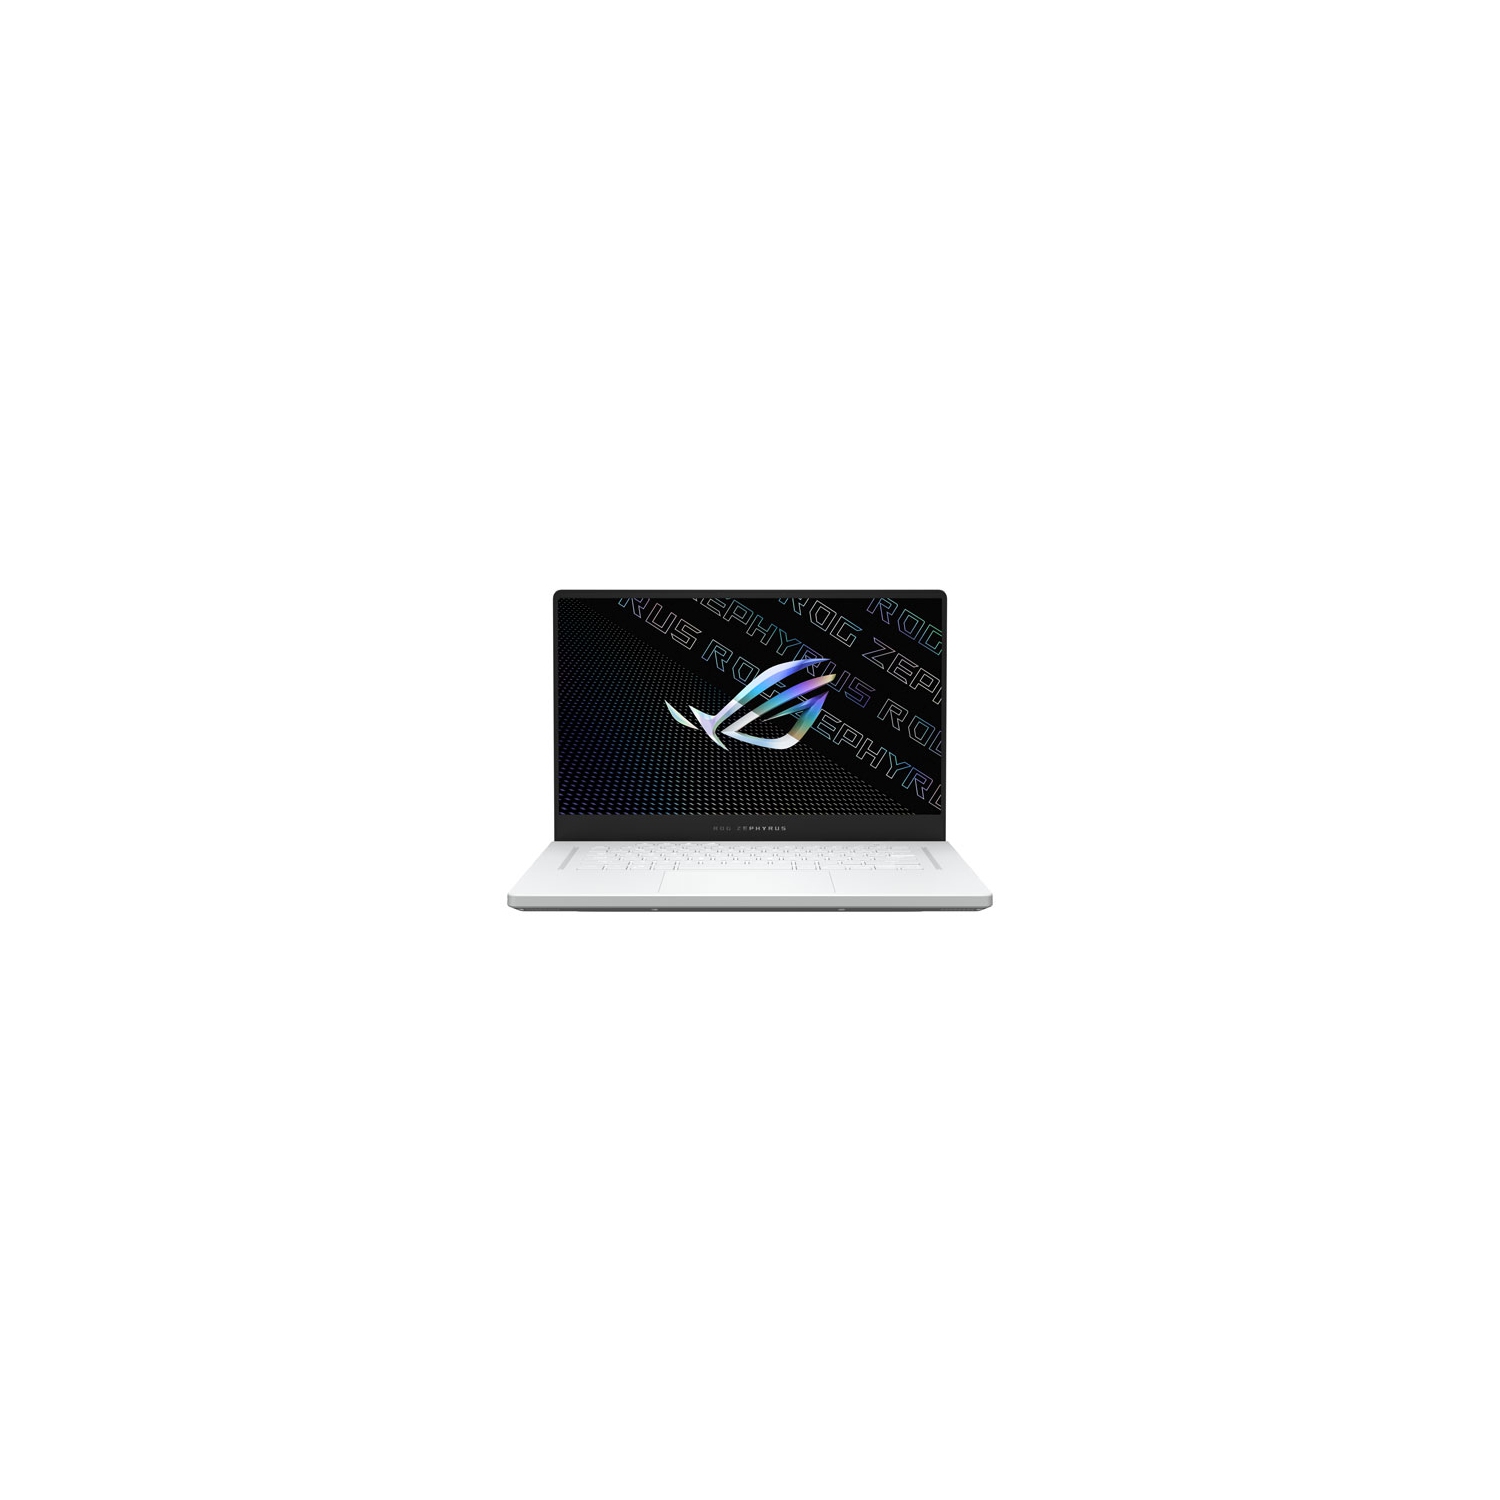 ASUS ROG Zephyrus G15 15.6" Gaming Laptop - White (AMD Ryzen 9 5900HS/1TB SSD/16GB RAM/RTX 3050 Ti) -Open Box